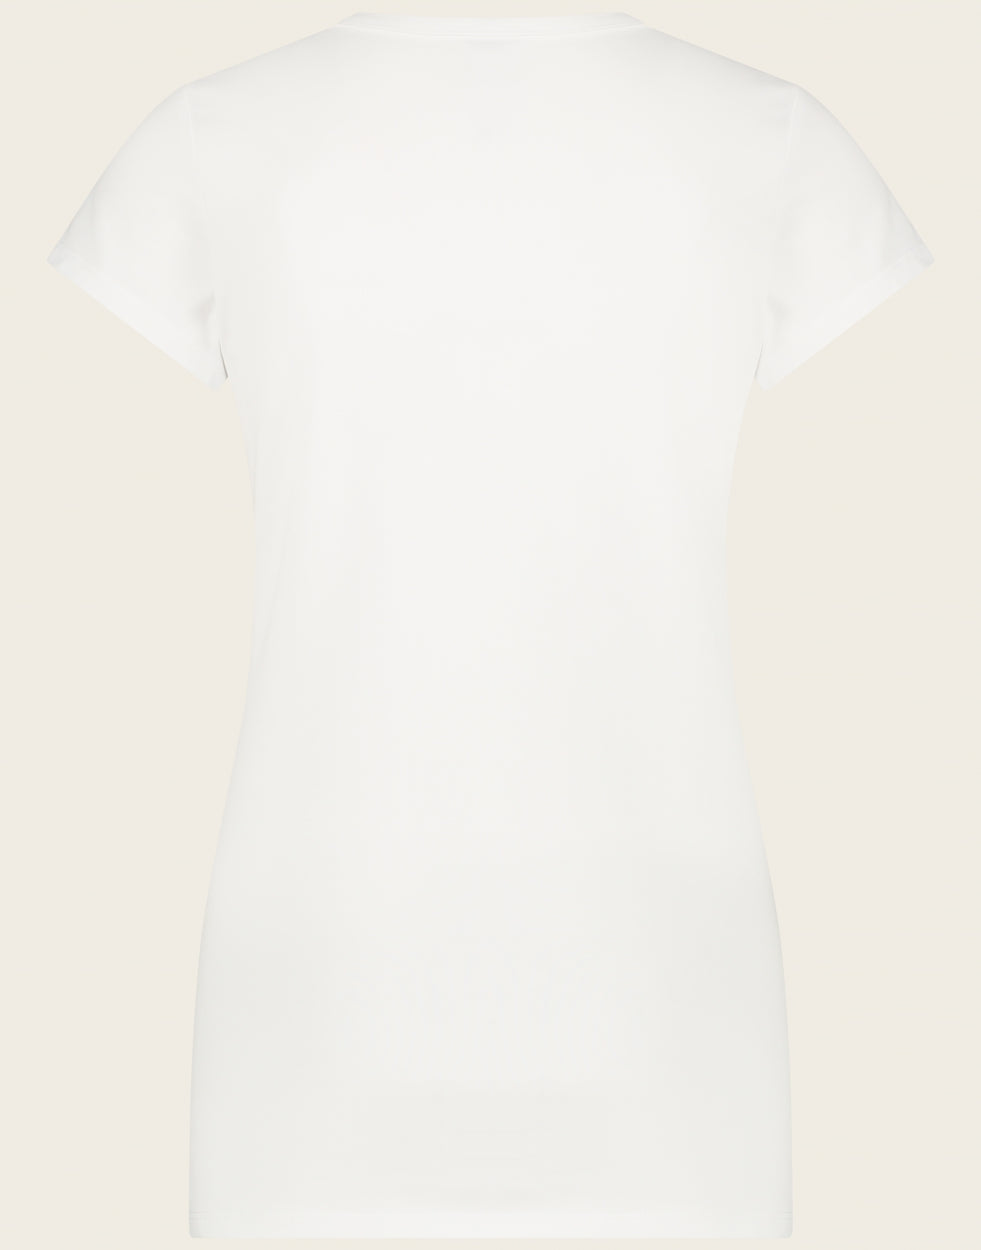 T shirt V Neck easy wear Organic Cotton | White